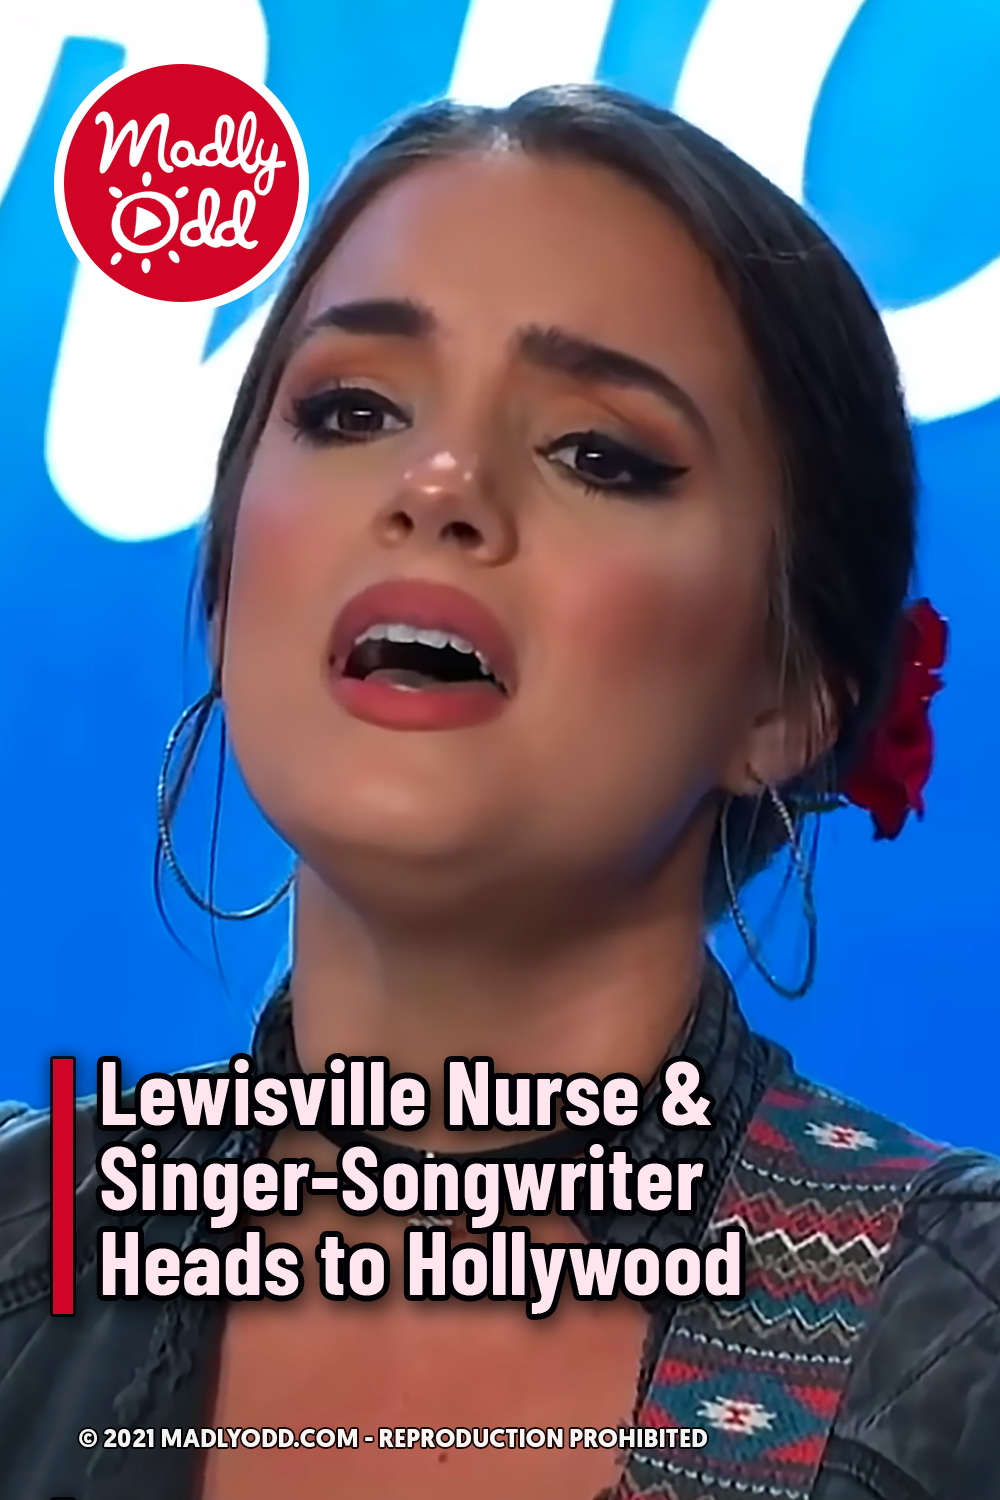 Lewisville Nurse & Singer-Songwriter Heads to Hollywood